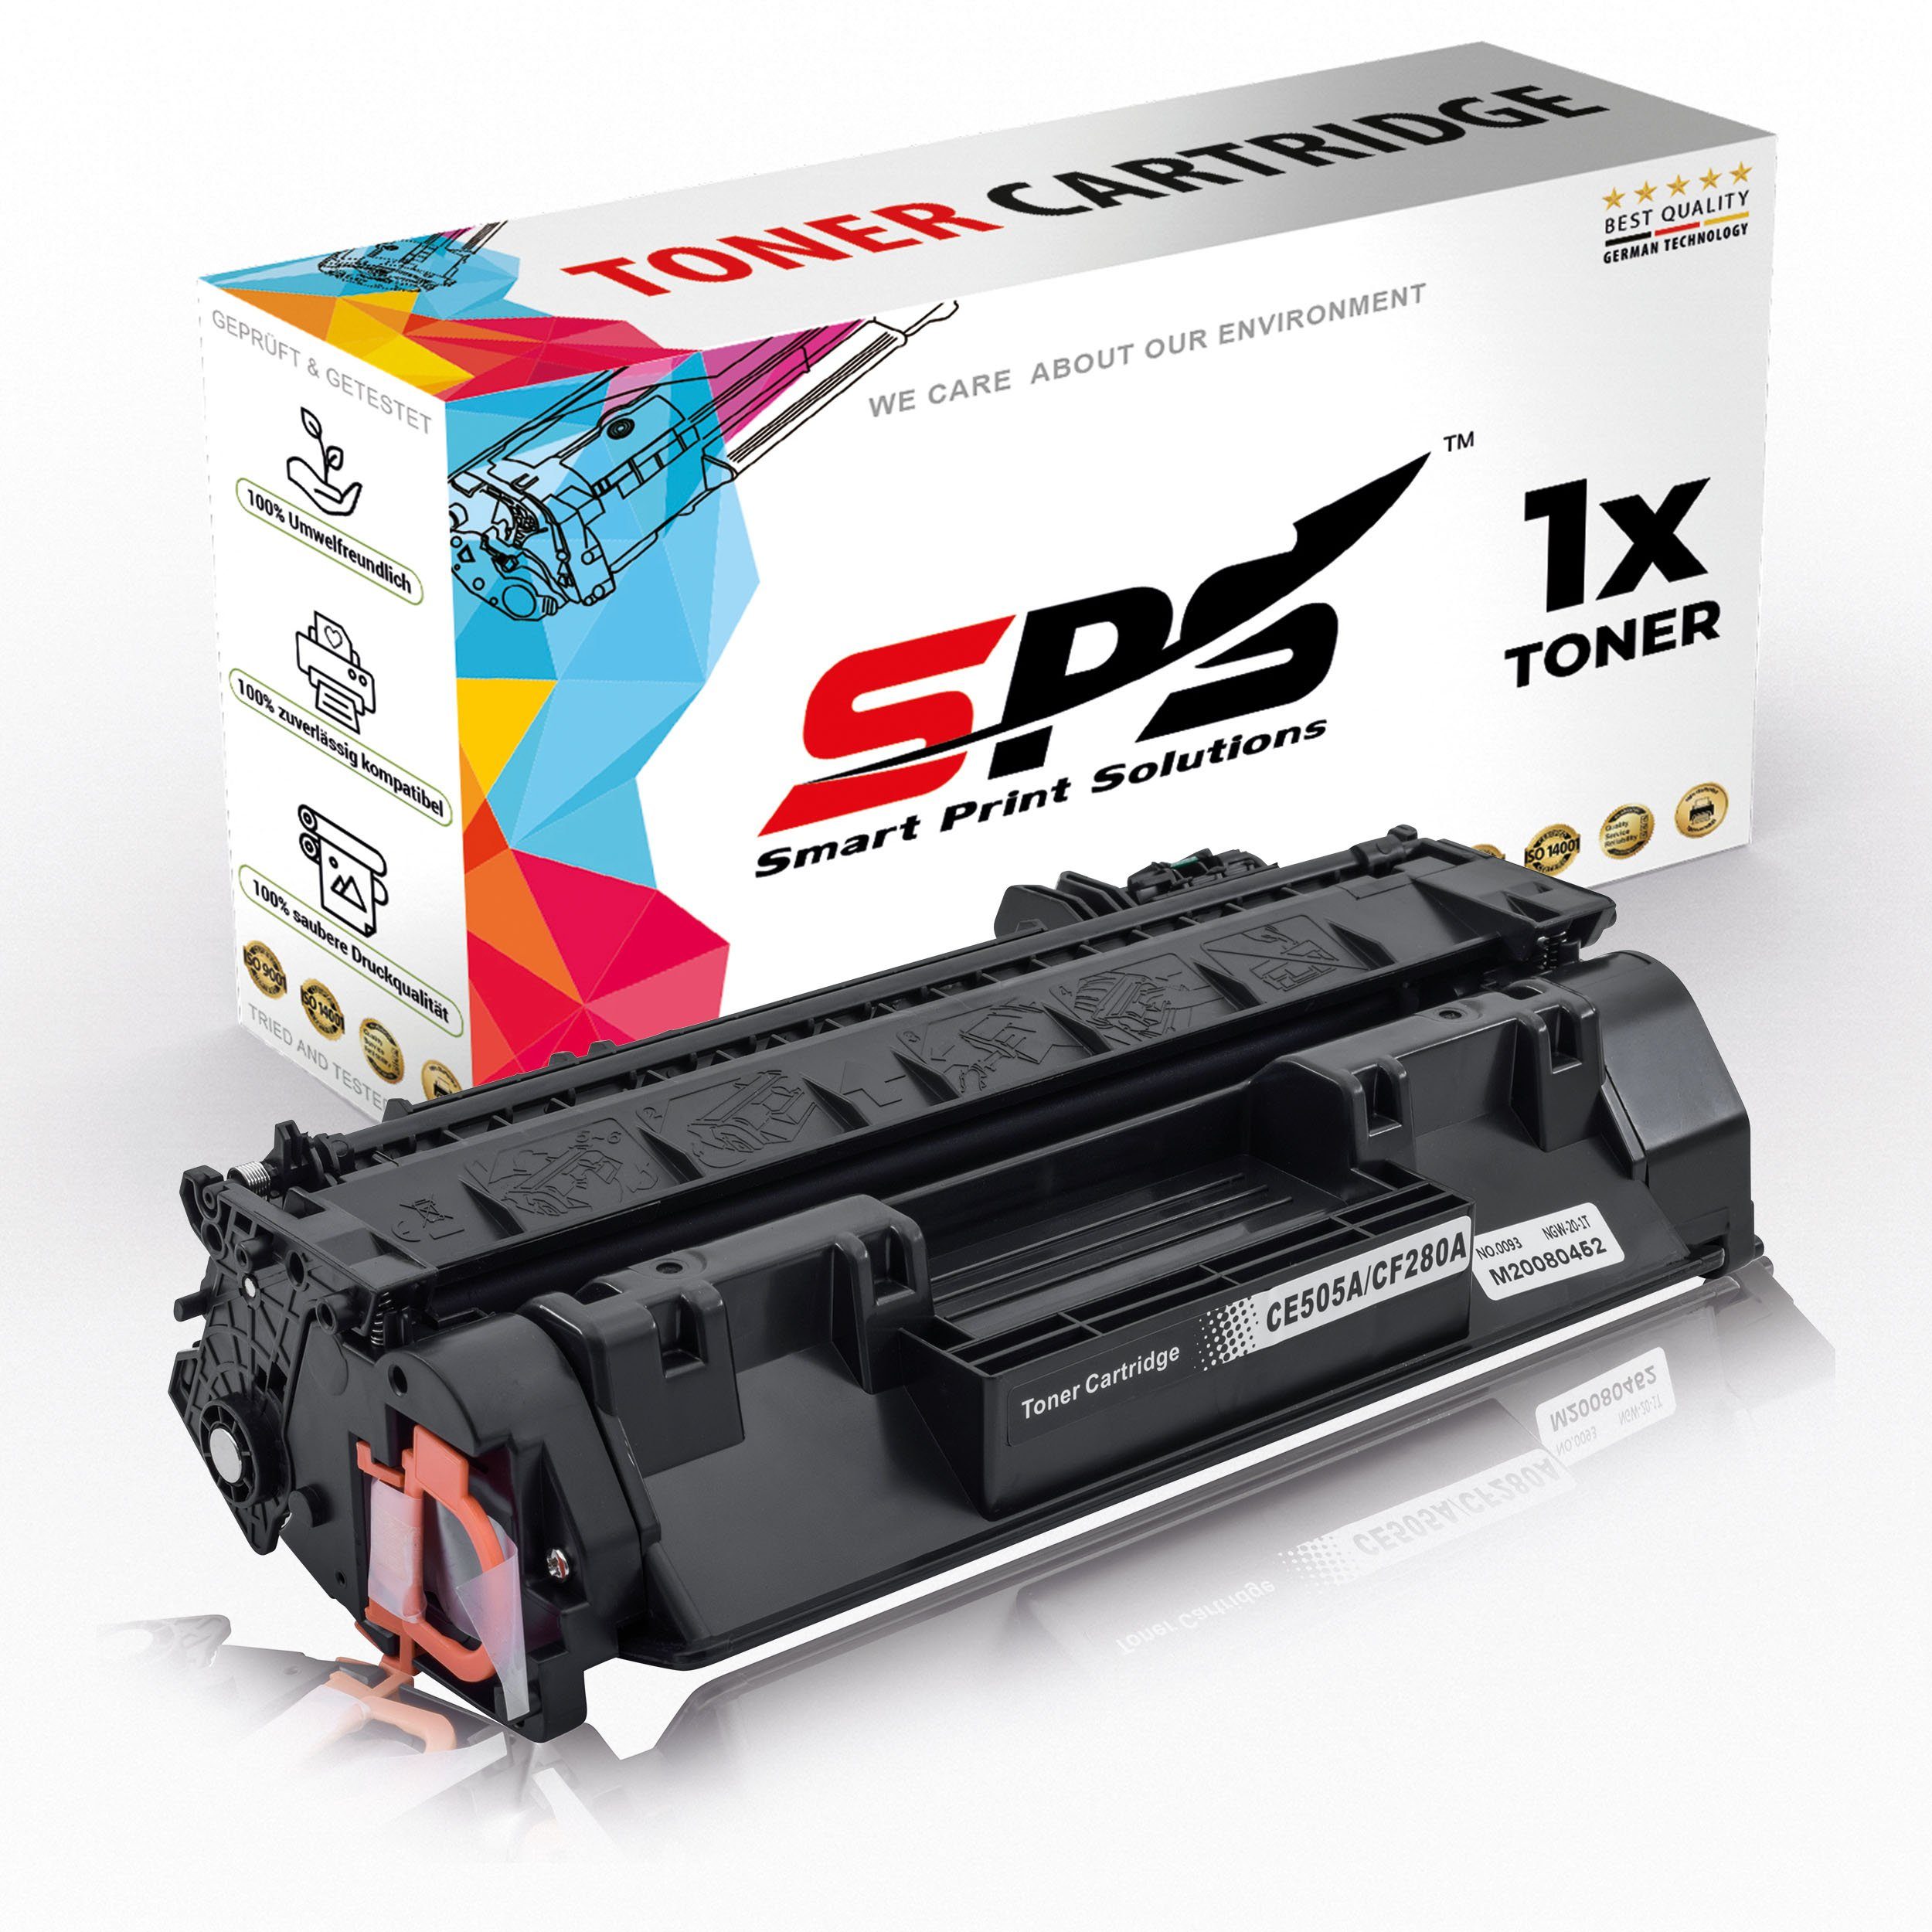 SPS Tonerkartusche Kompatibel für HP Laserjet Pro 400 MFP M425 80A, (1er Pack)